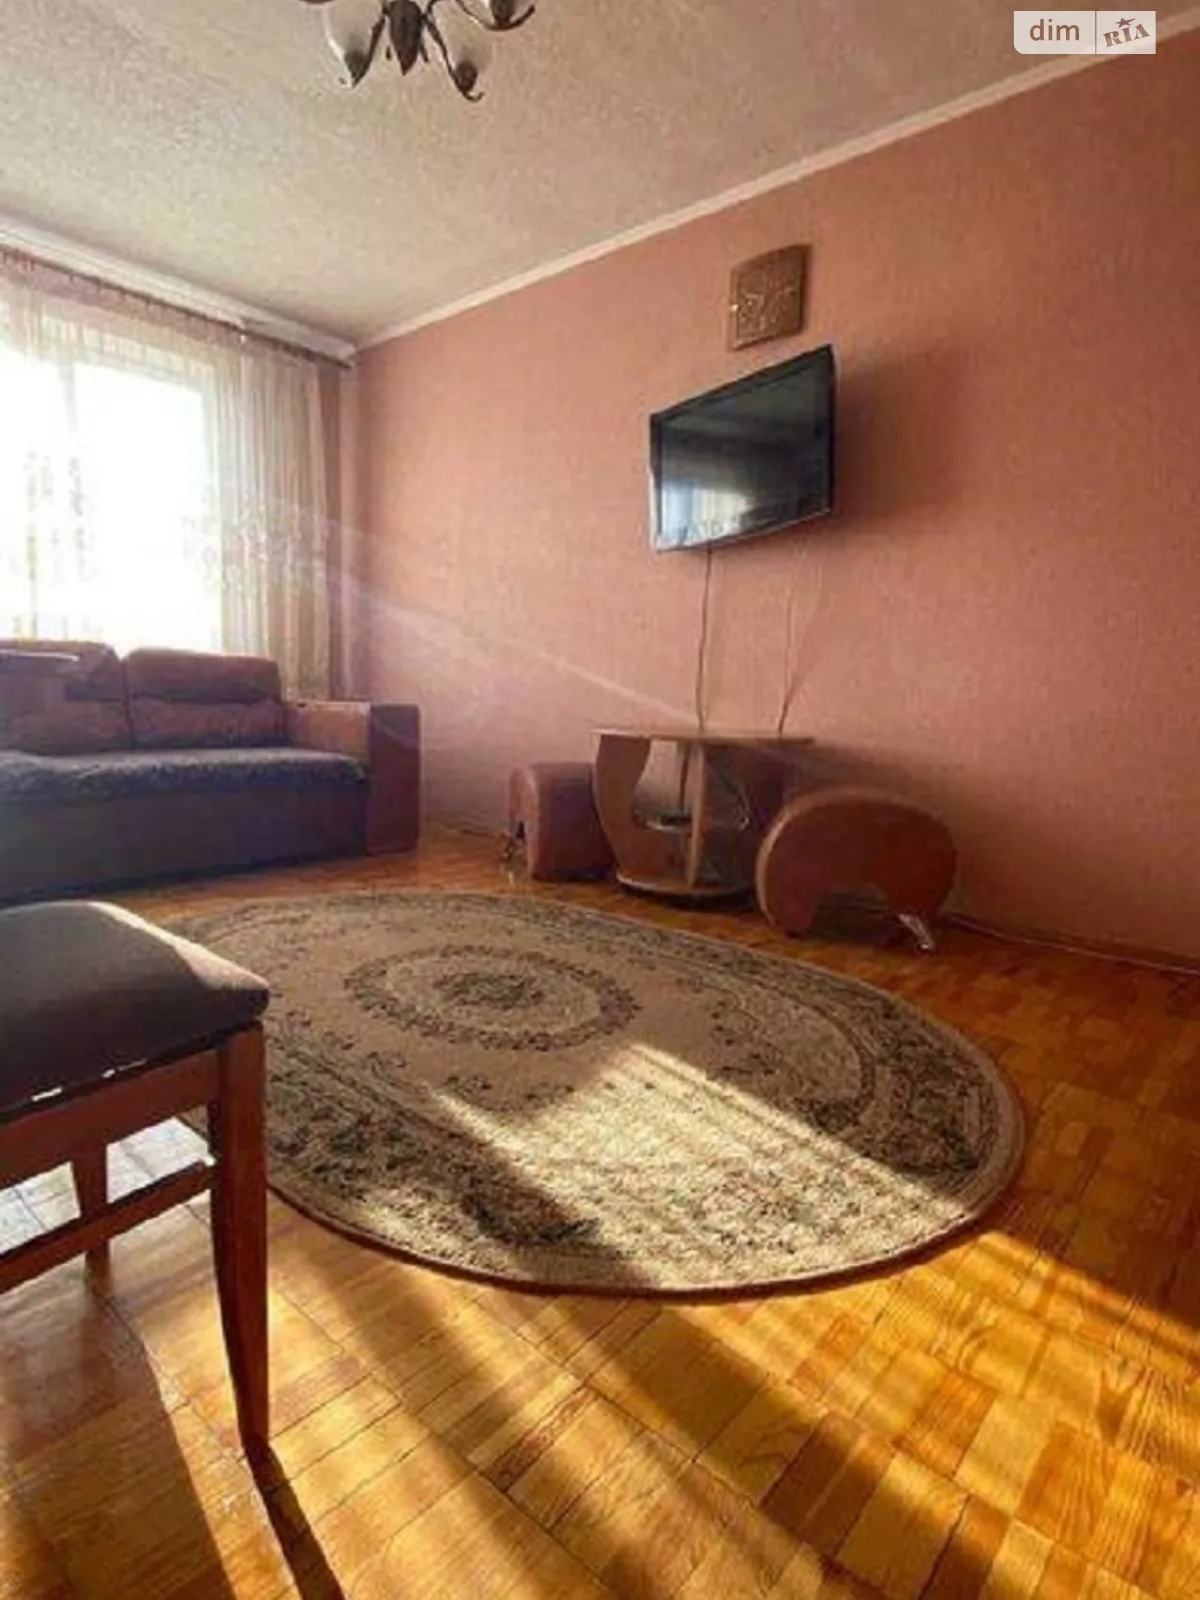 Сдается в аренду 2-комнатная квартира 48 кв. м в Киеве, ул. Левка Лукьяненко - фото 1